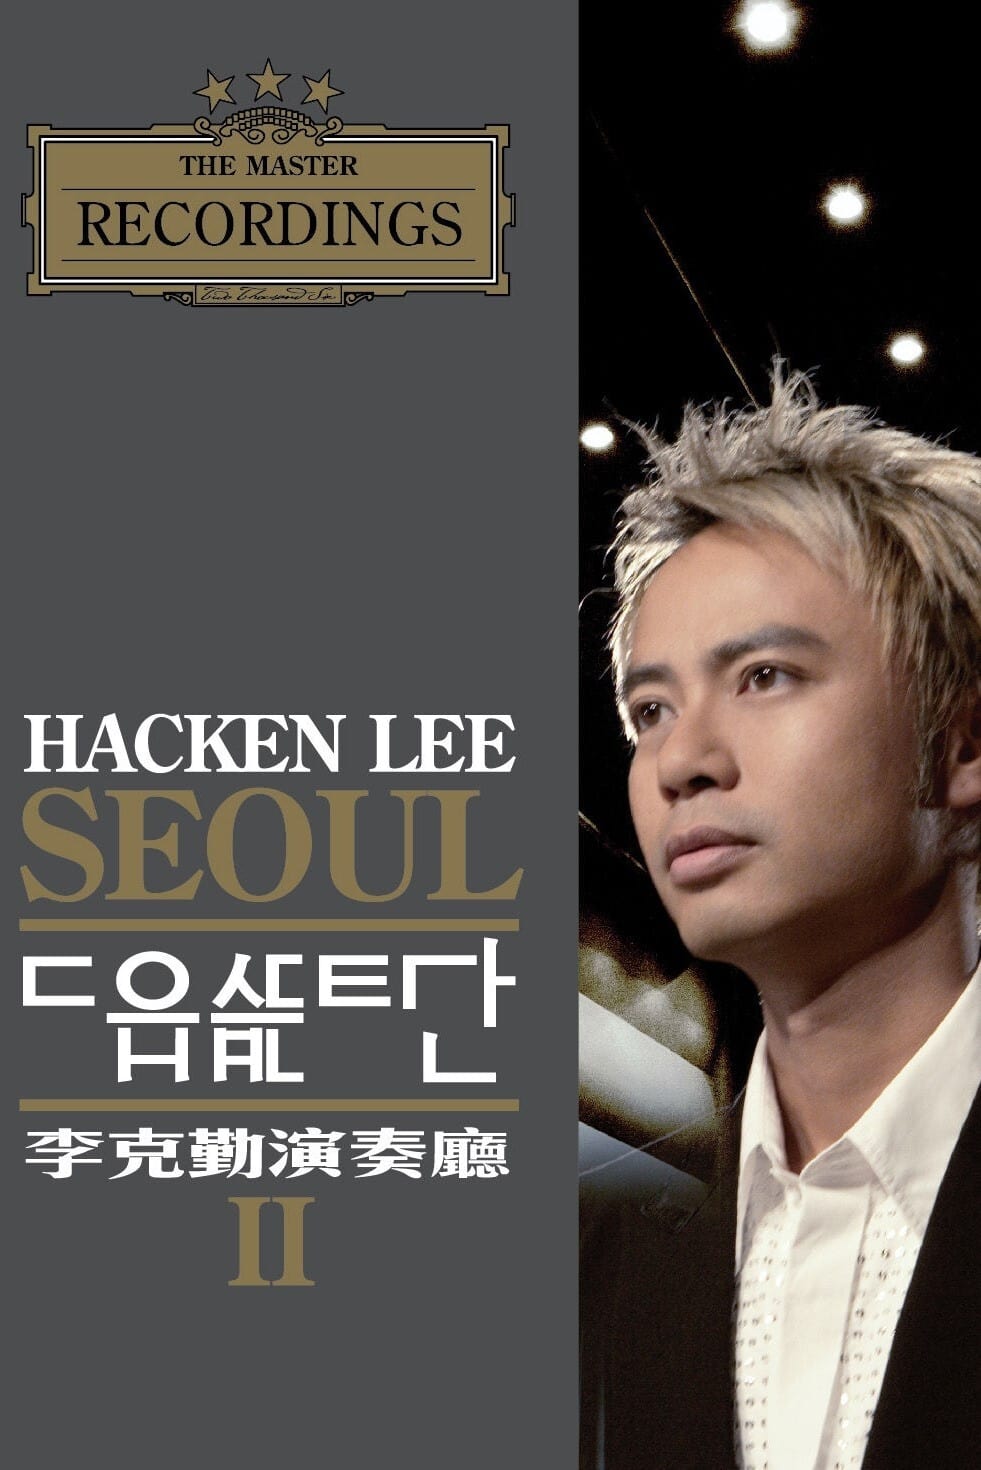 Hacken Lee Seoul Concert Hall II